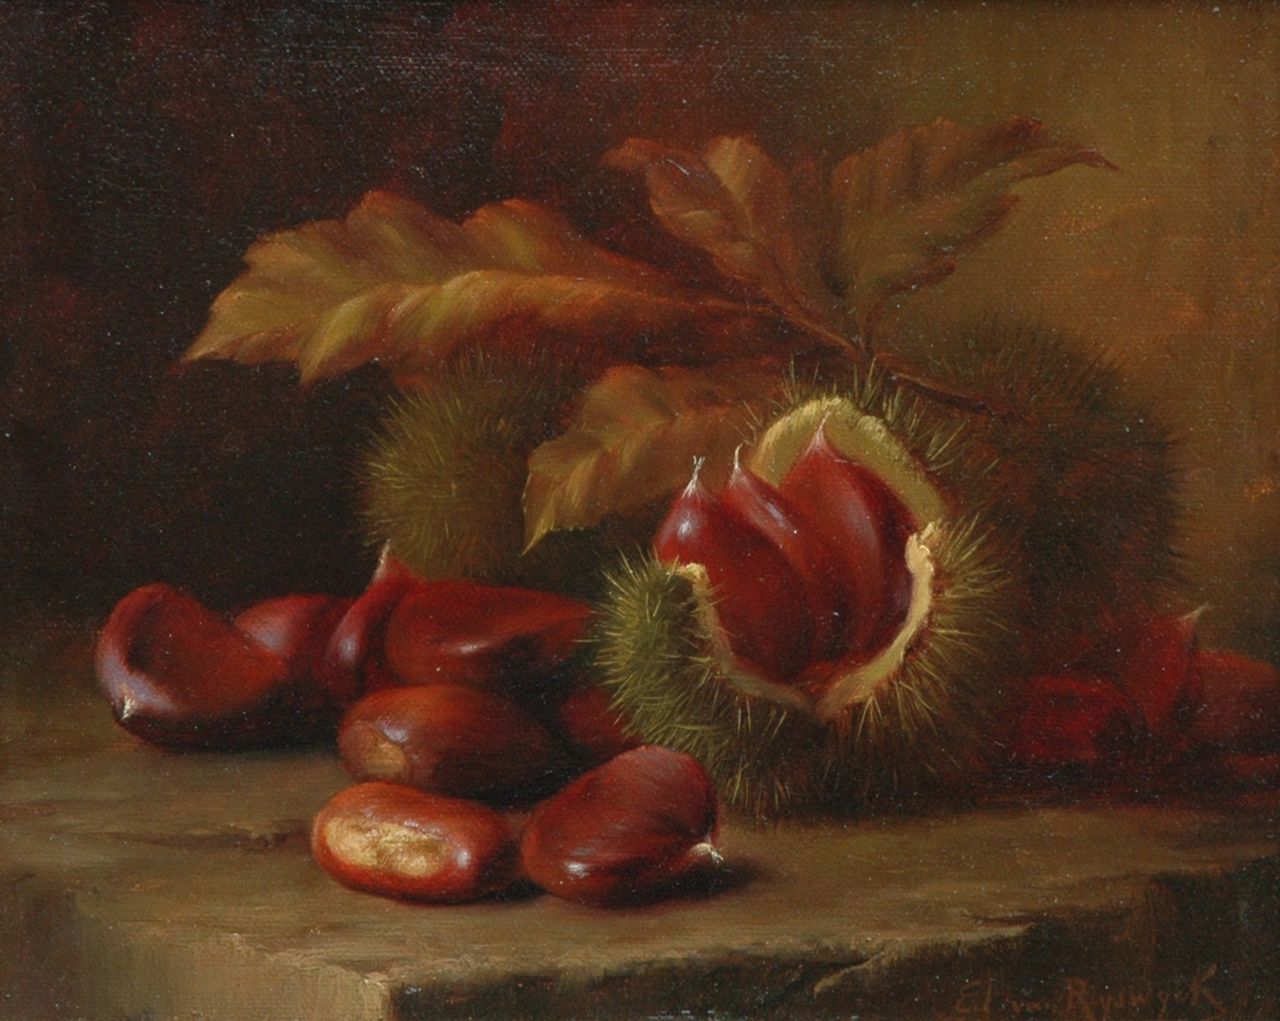 Ryswyck E. van | Edward van Ryswyck, Still life with sweet chestnuts, oil sketch on painter's board 21.8 x 26.8 cm, signed l.r.